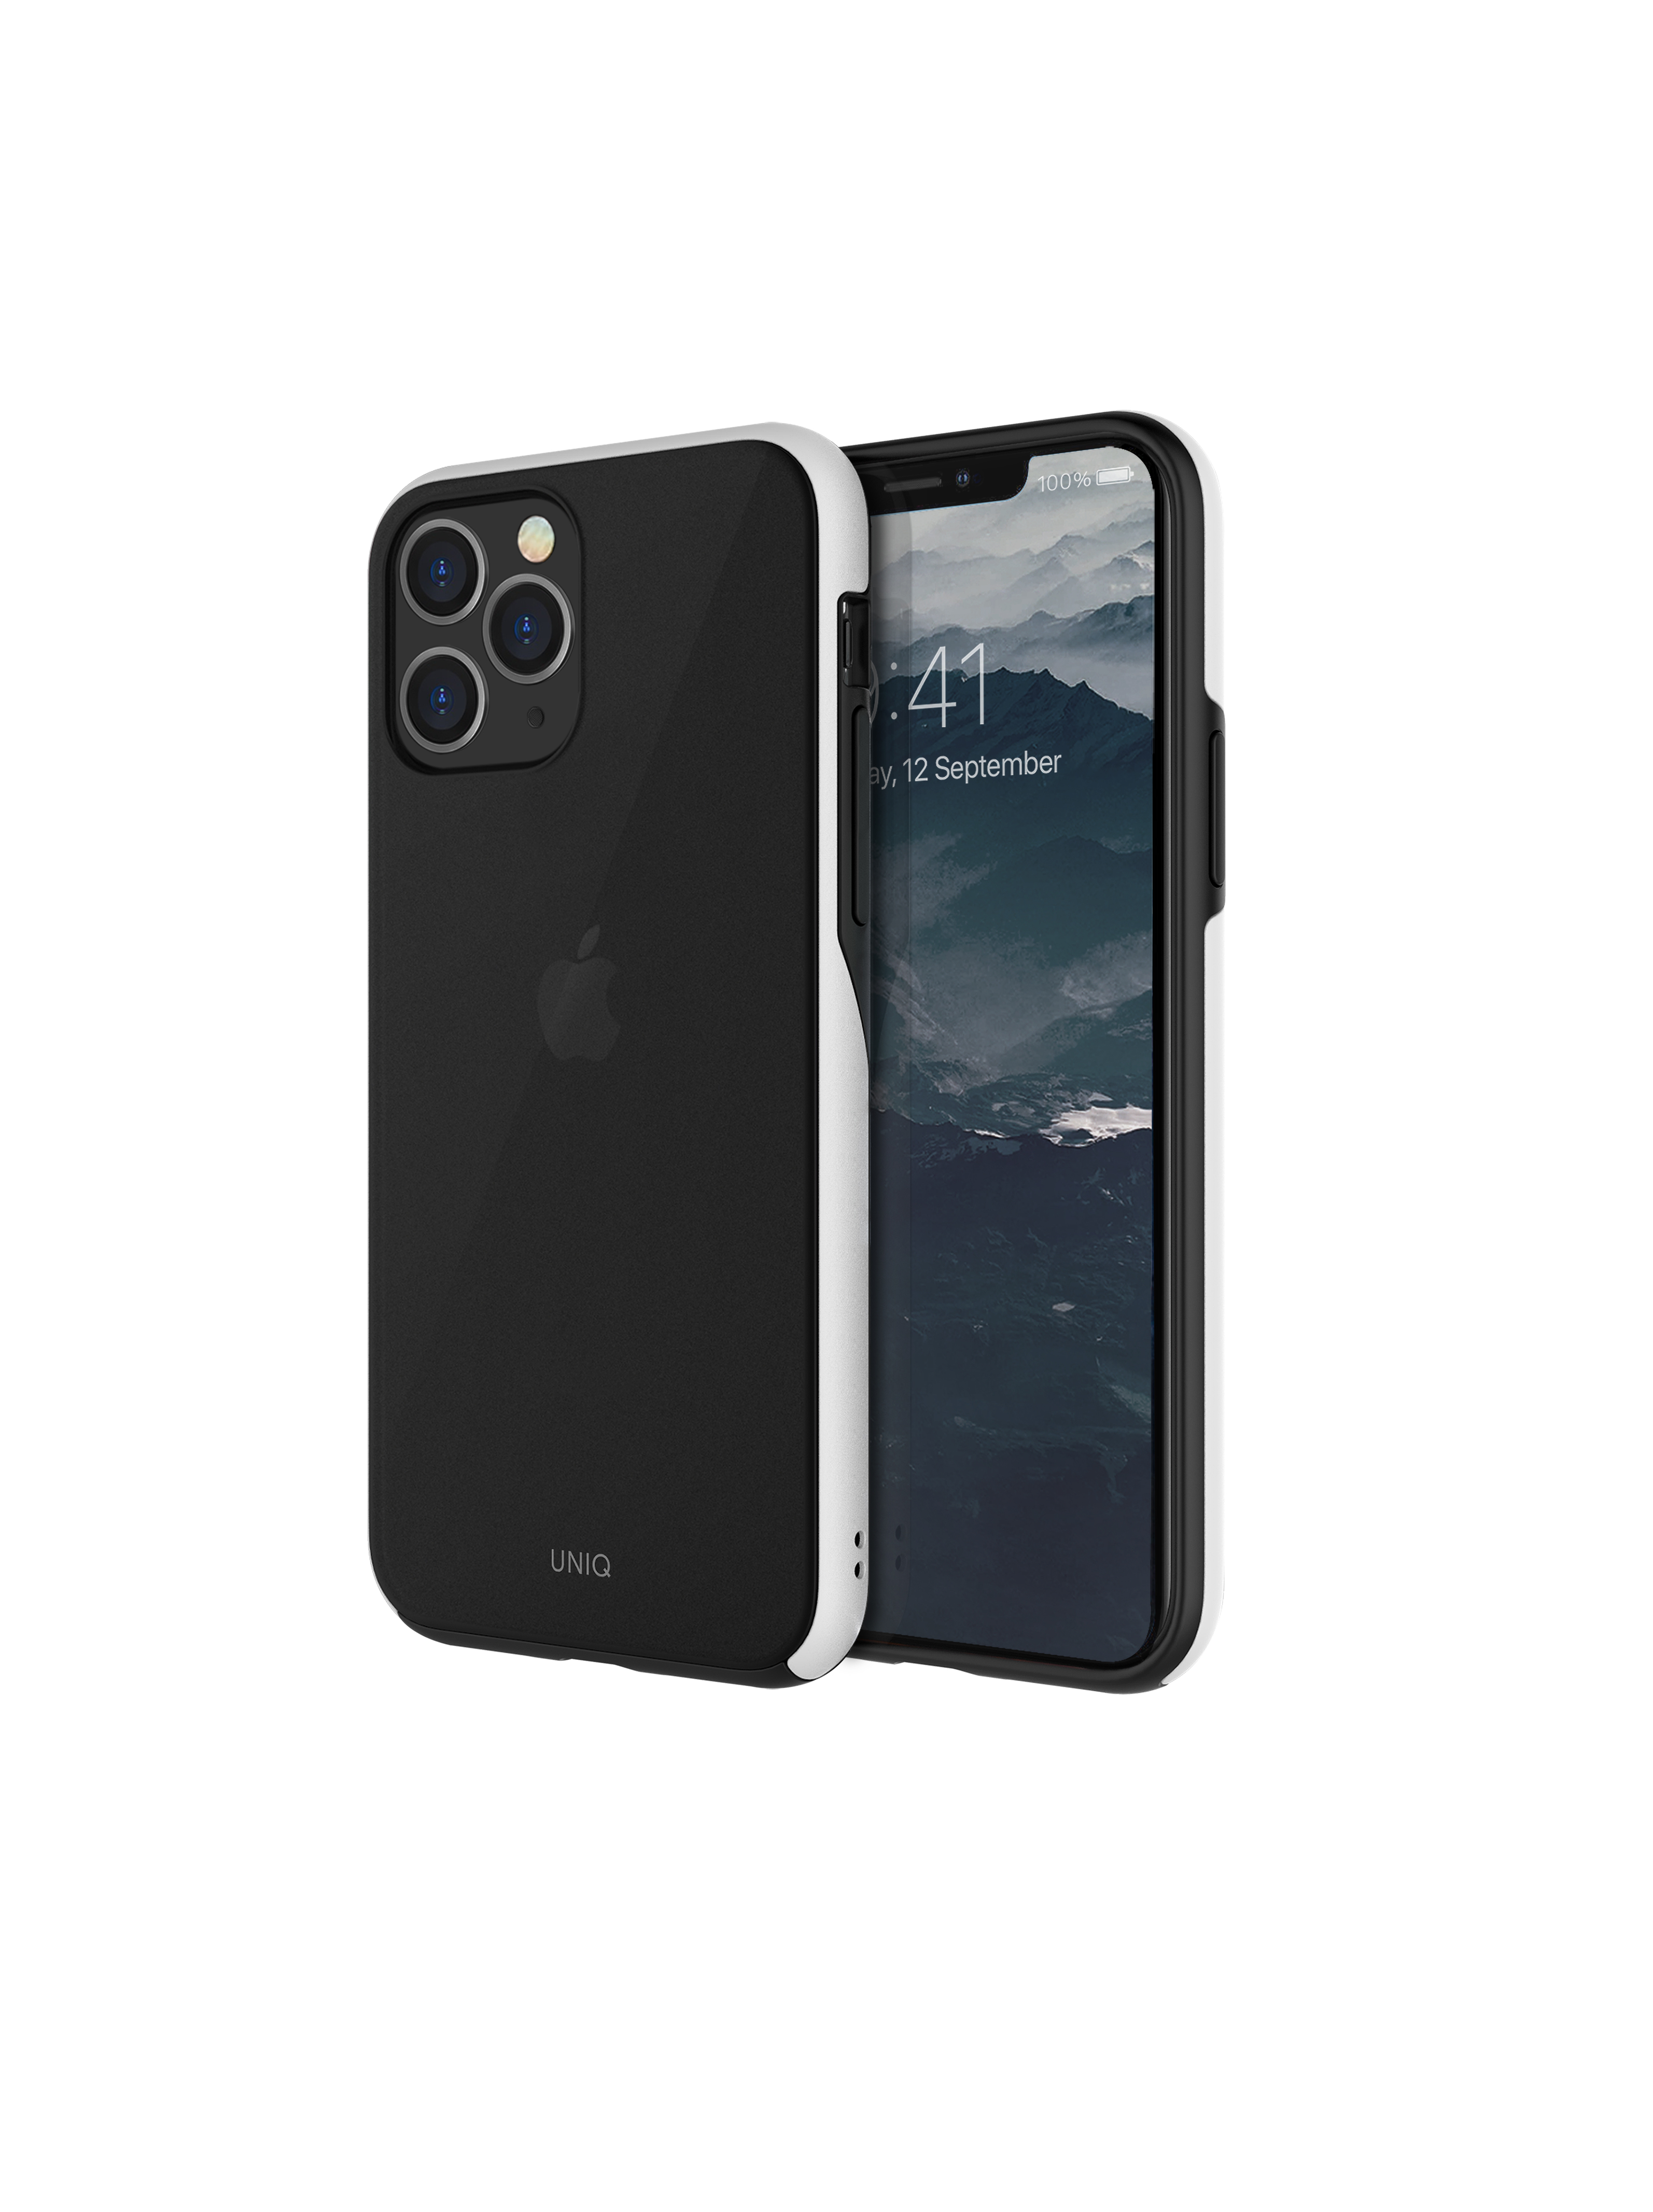 iPhone 11 Pro, case vesto hue, black/white